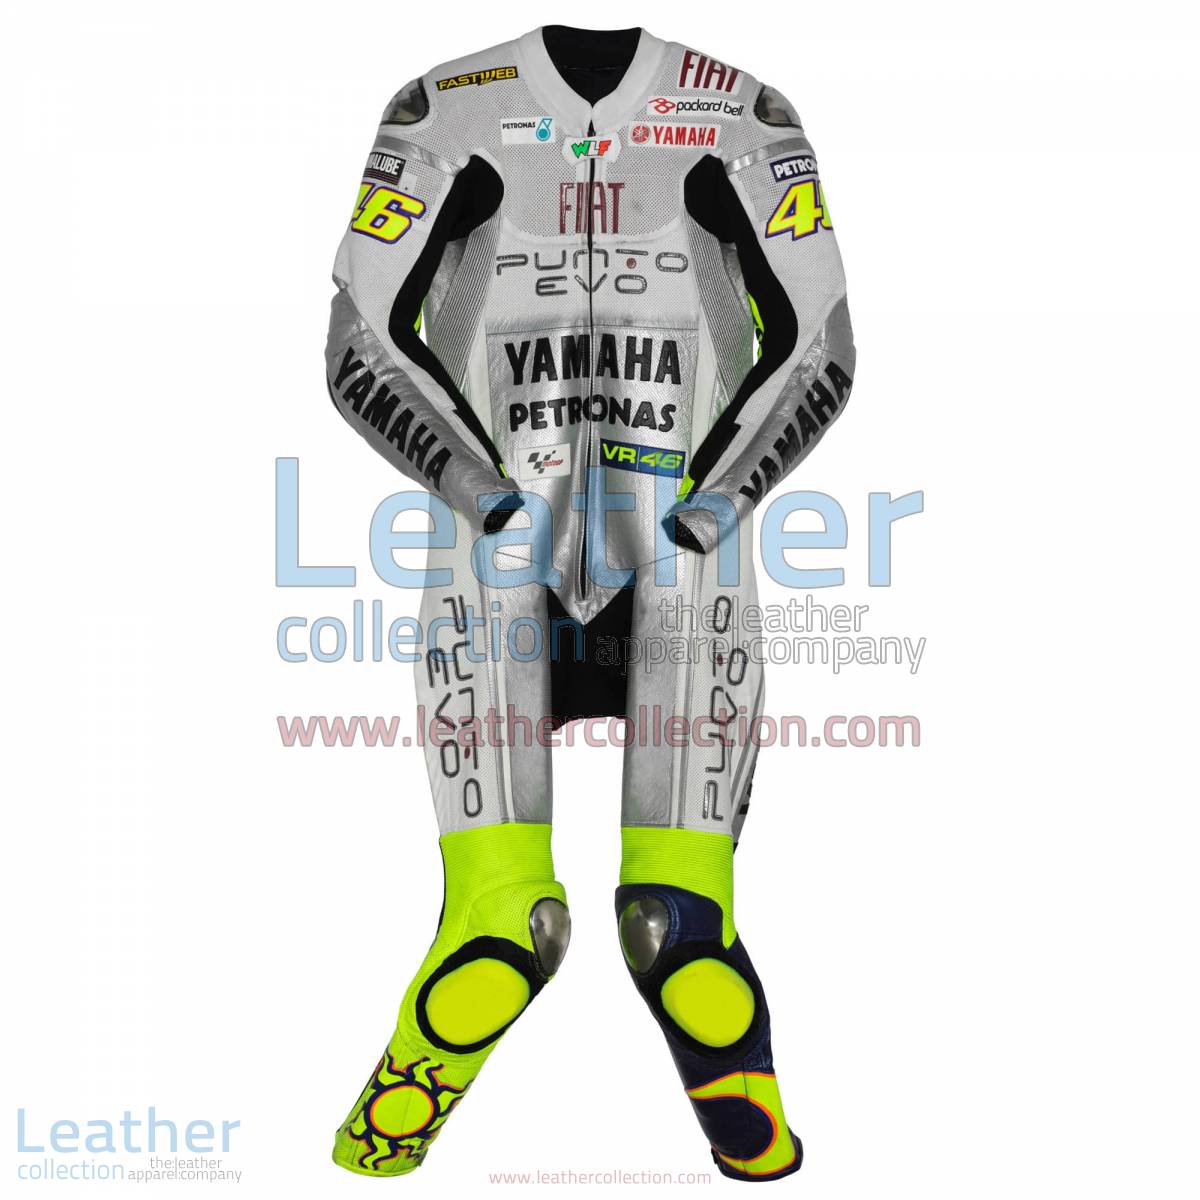 Valentino Rossi Yamaha Fiat 2009 Racing Suit | racing suit